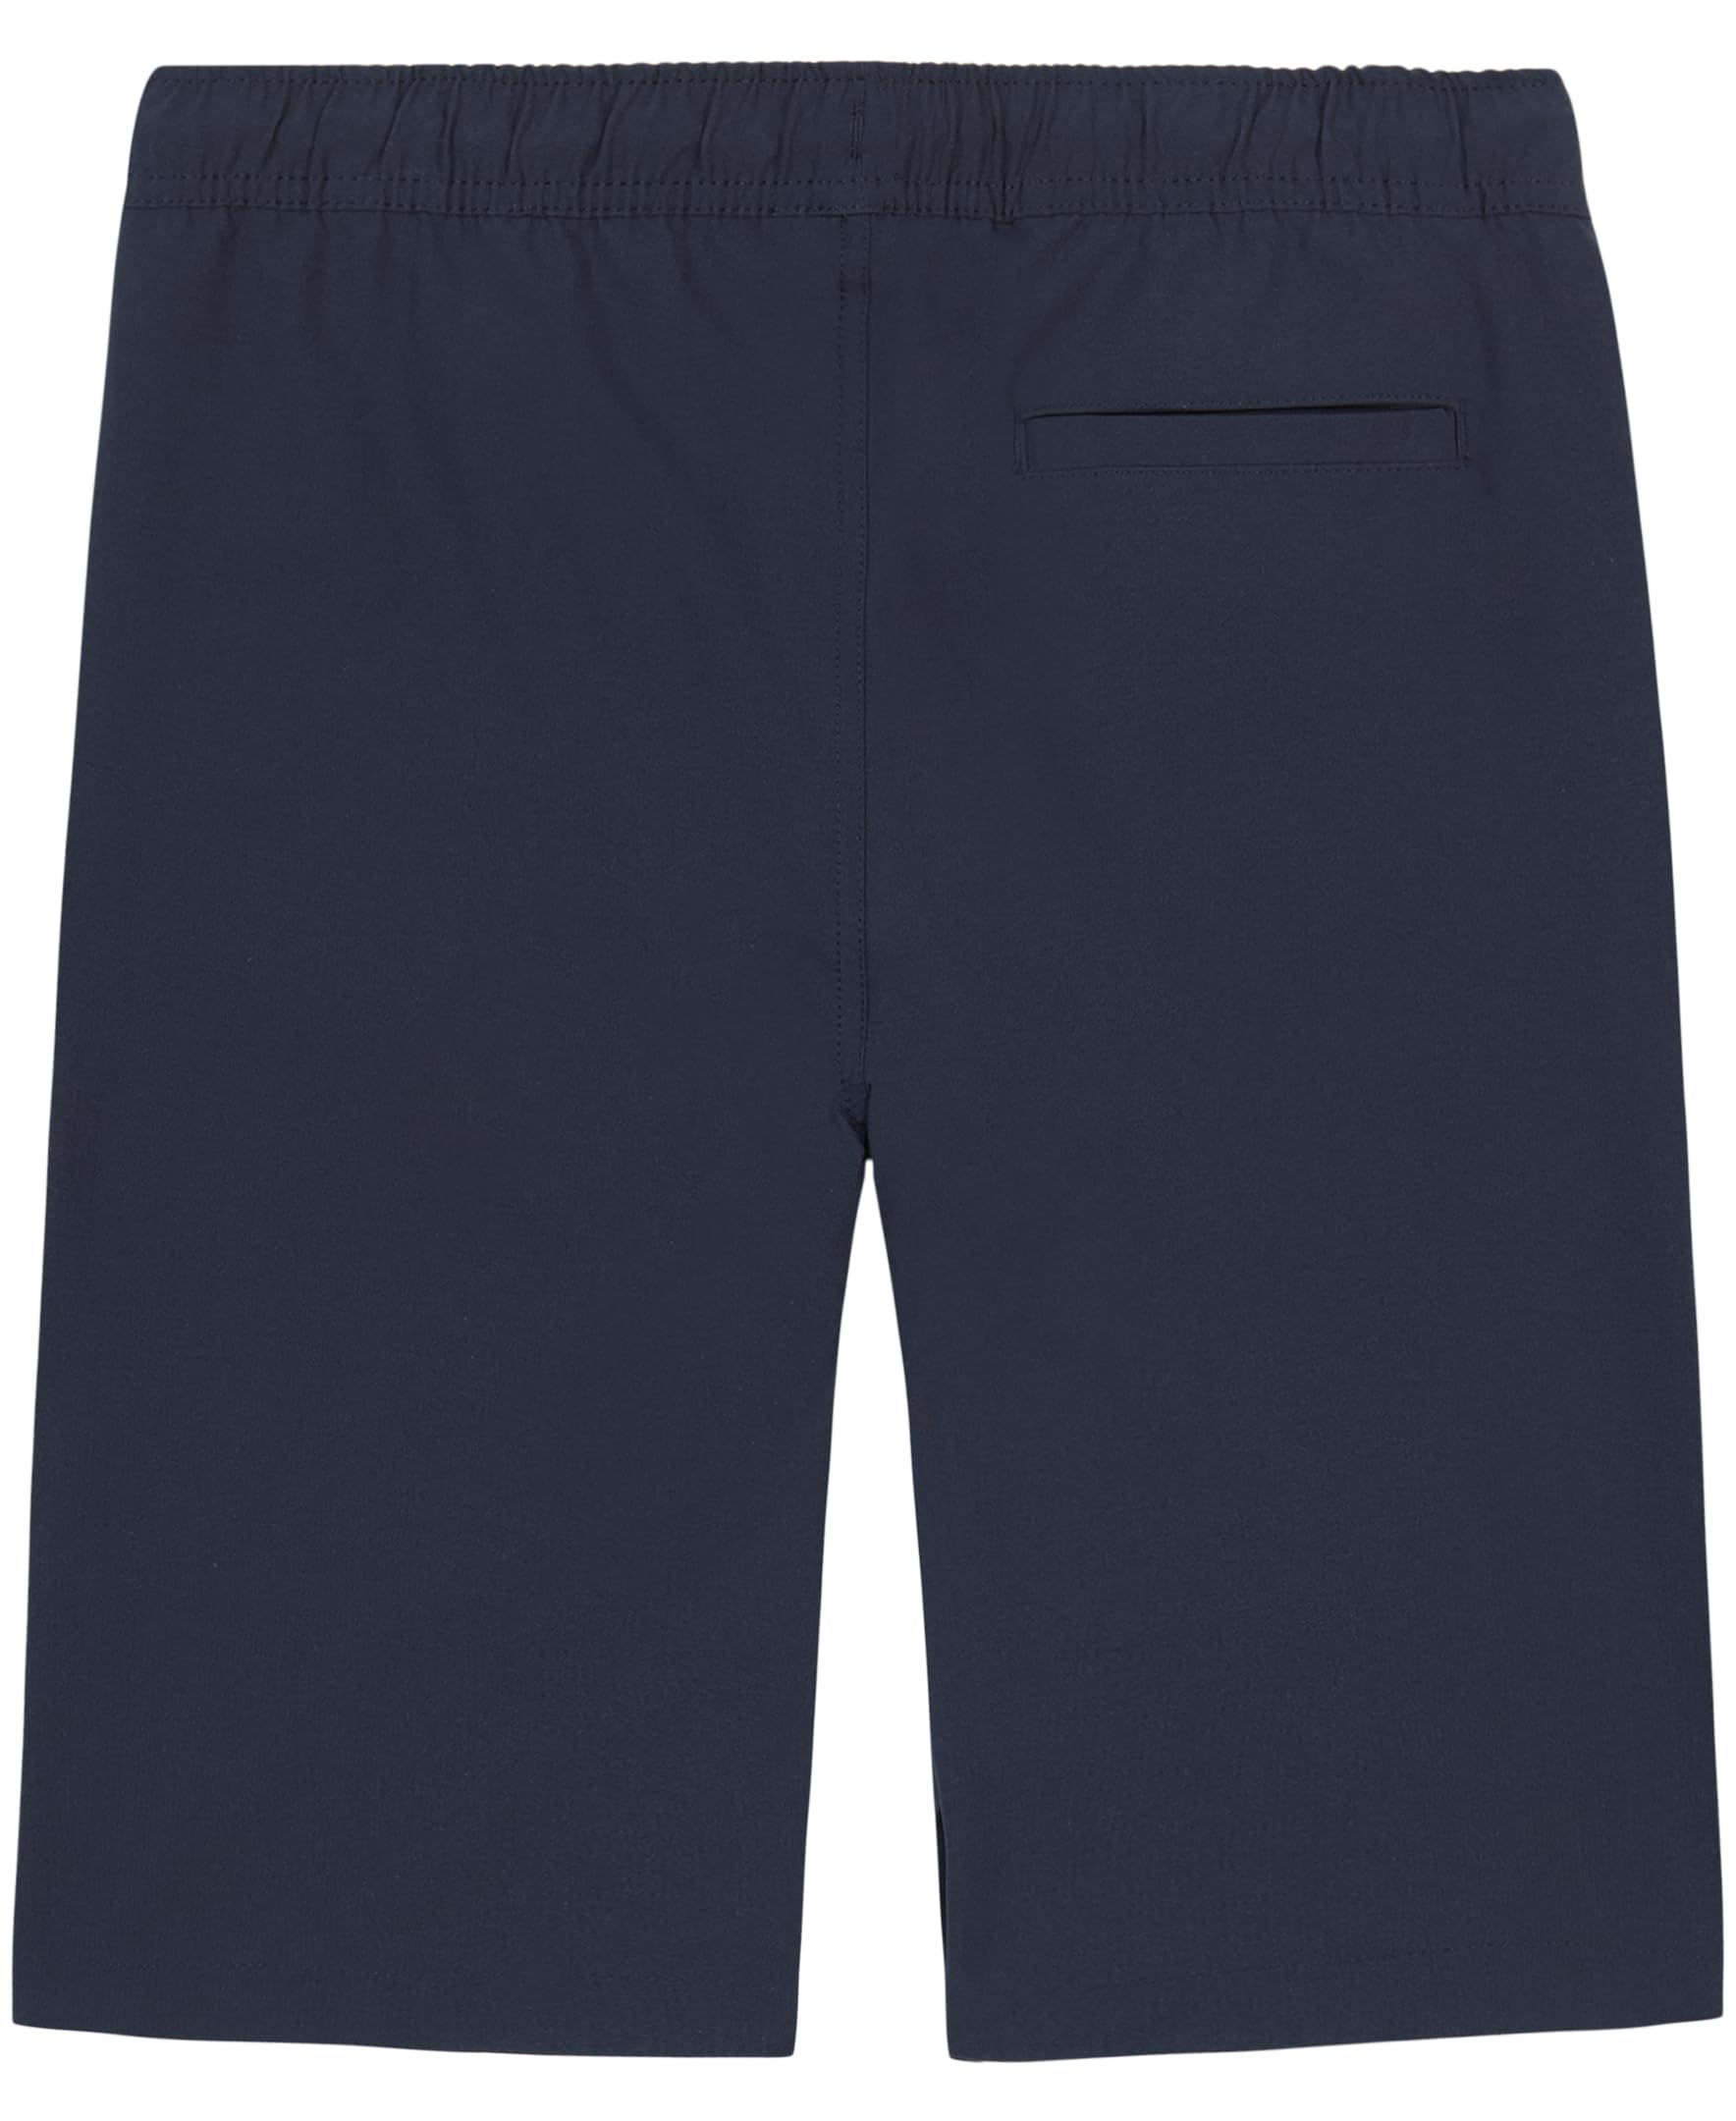 Nautica Boys' School Uniform Jogger Shorts, Elastic Waistband with Drawstring Closure, Wrinkle & Fade Resistant Fabric